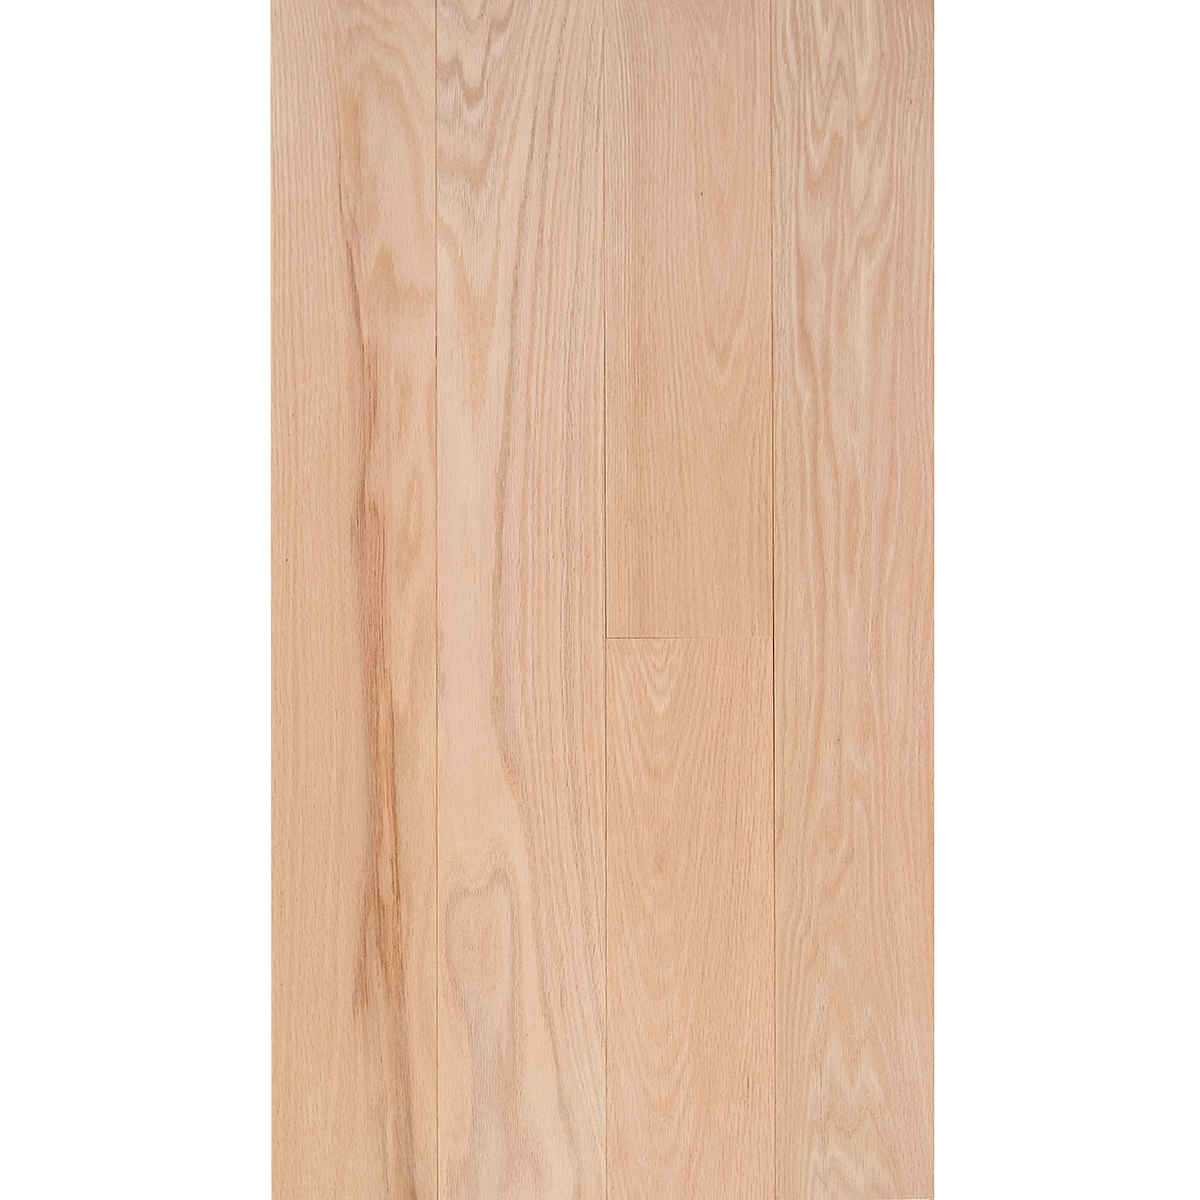 Red Oak 3 4 X 5 Select Grade Flooring, 5 Oak Hardwood Flooring